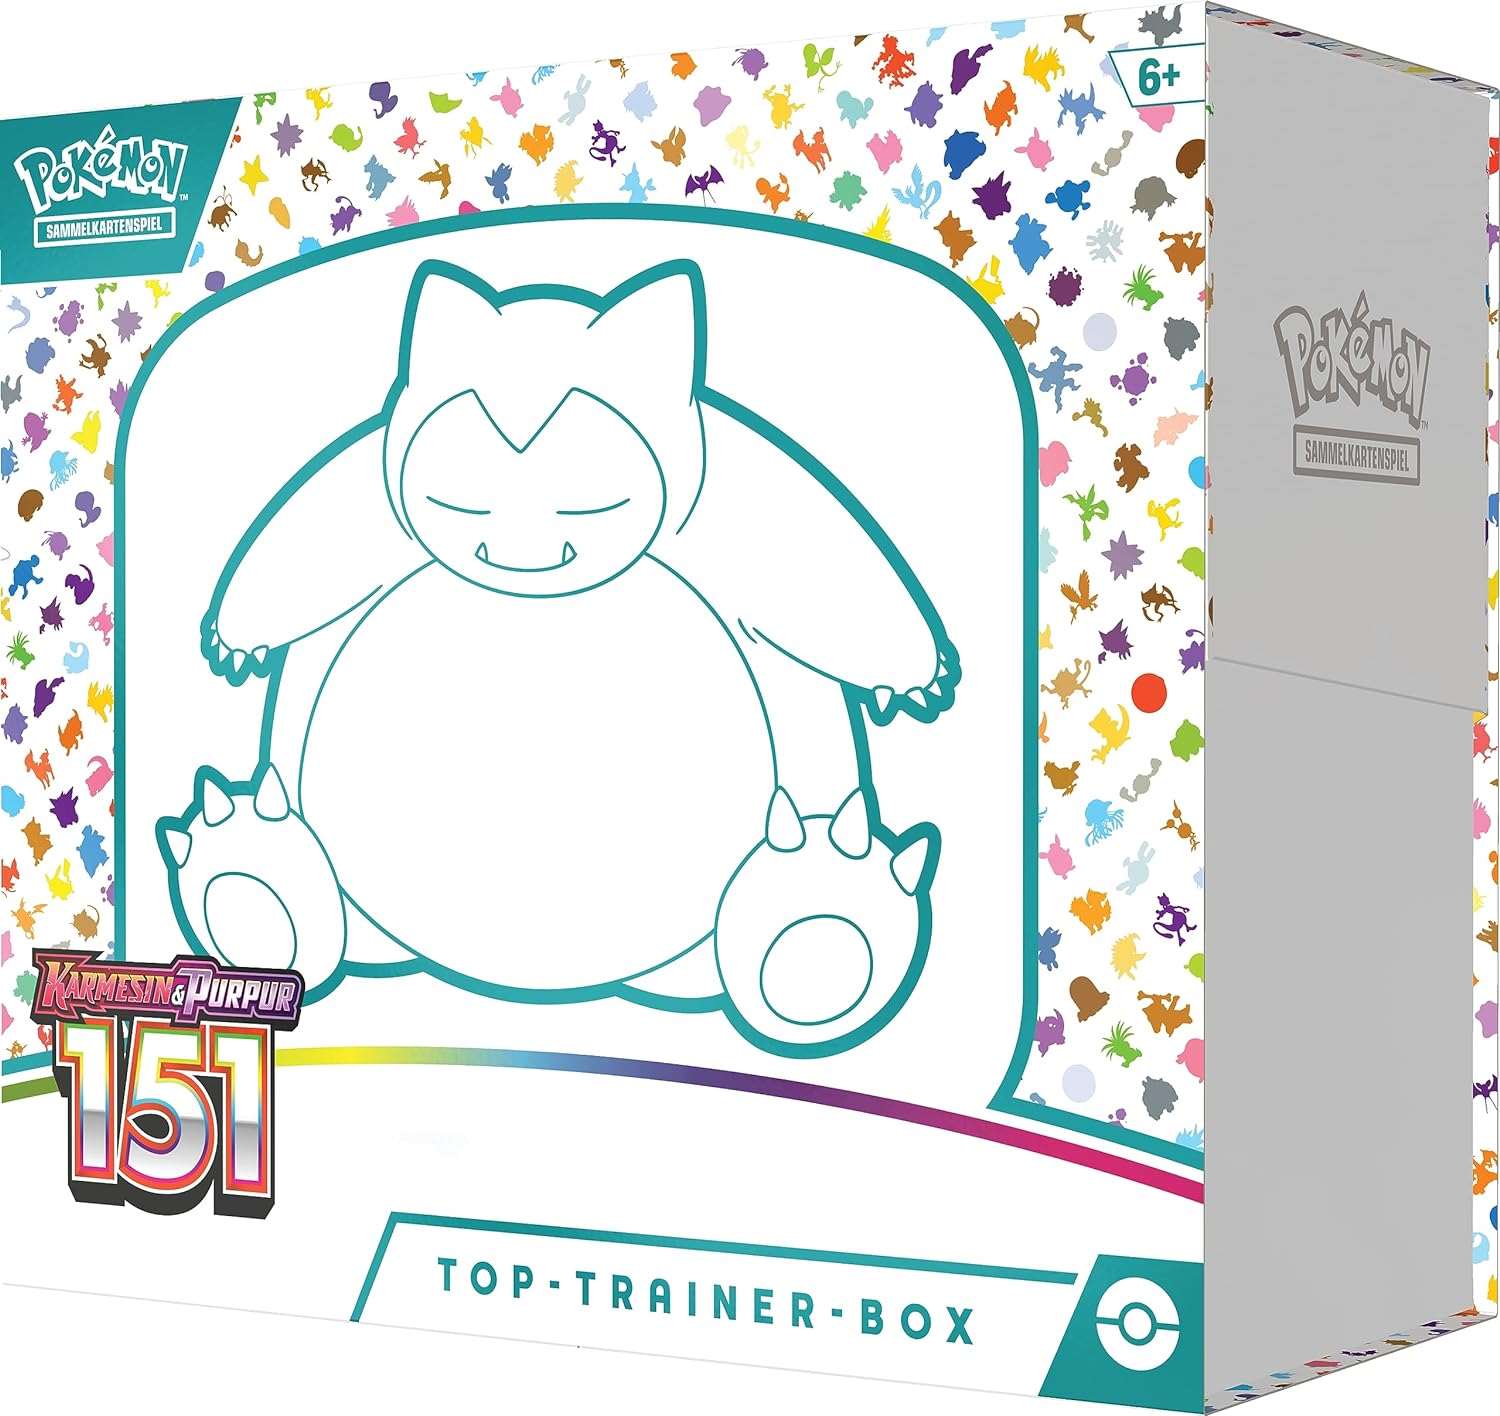 Pokémon - Karmesin & Purpur: 151 Top Trainer Box - DE - CardCosmos